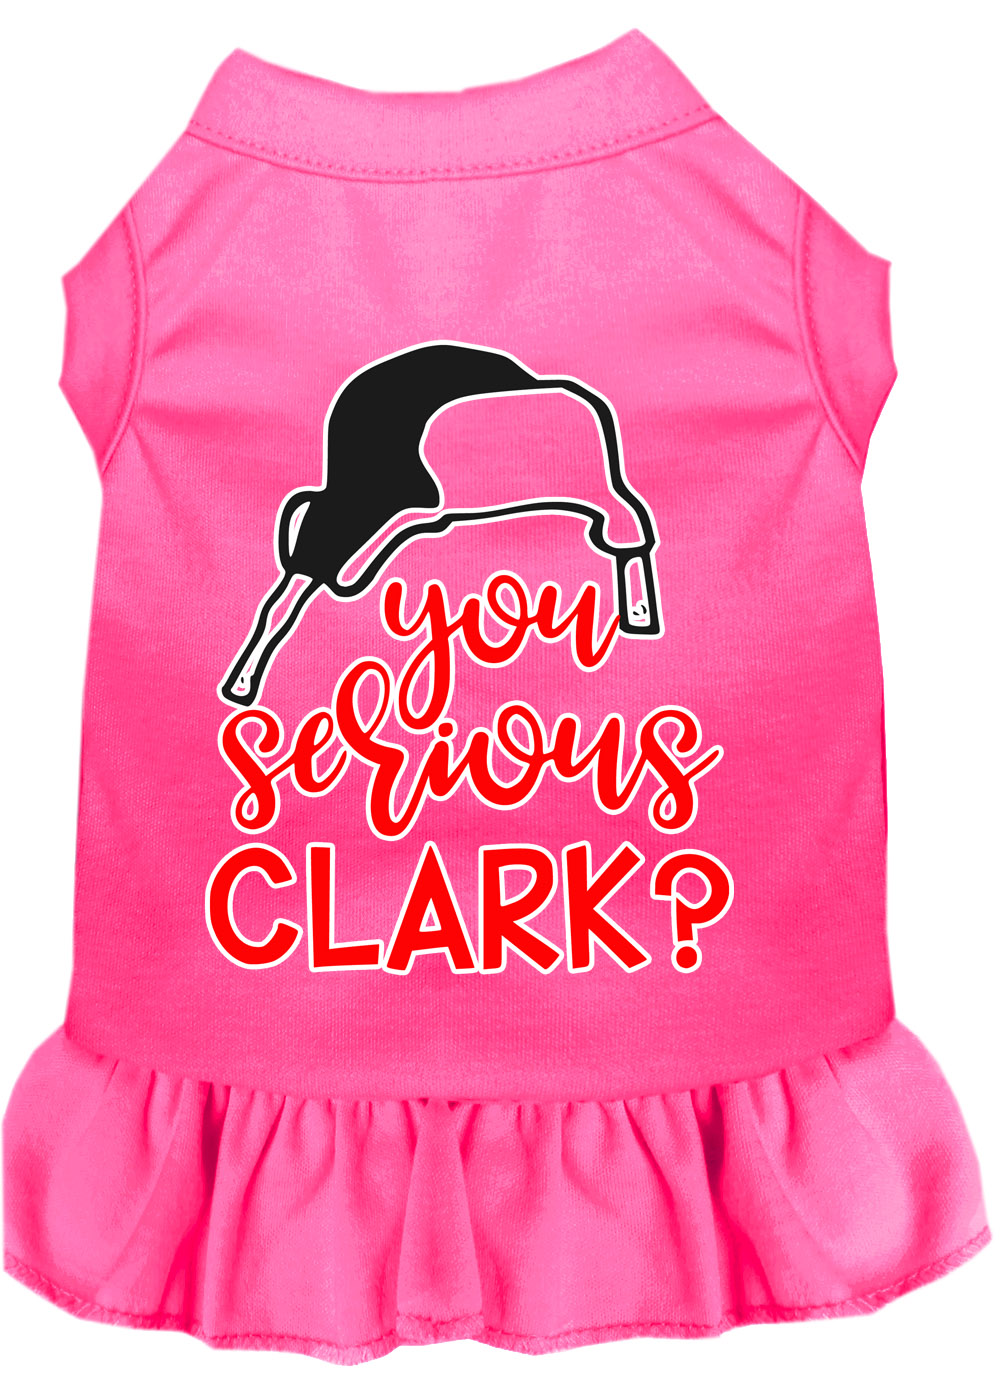 You Serious Clark? Screen Print Dog Dress Bright Pink XS